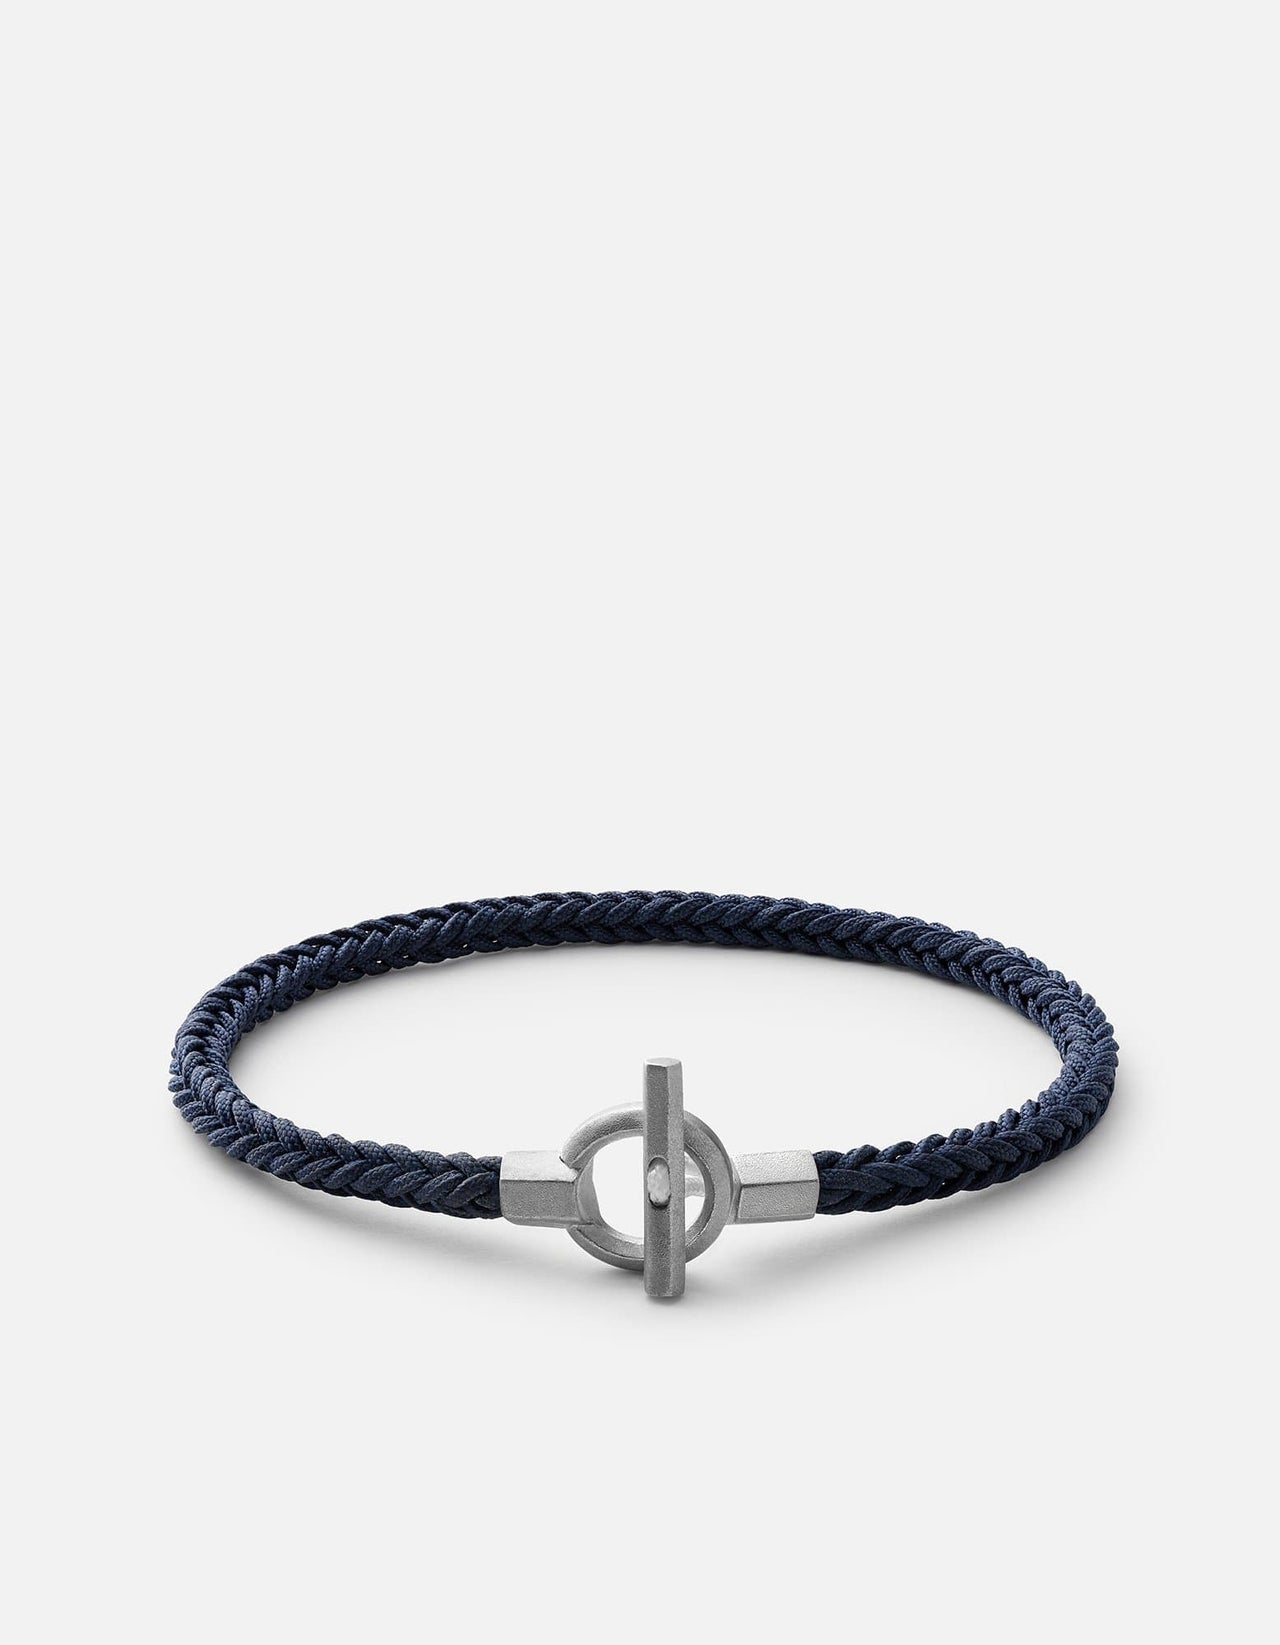 Bracelet for men made of nylon and silver